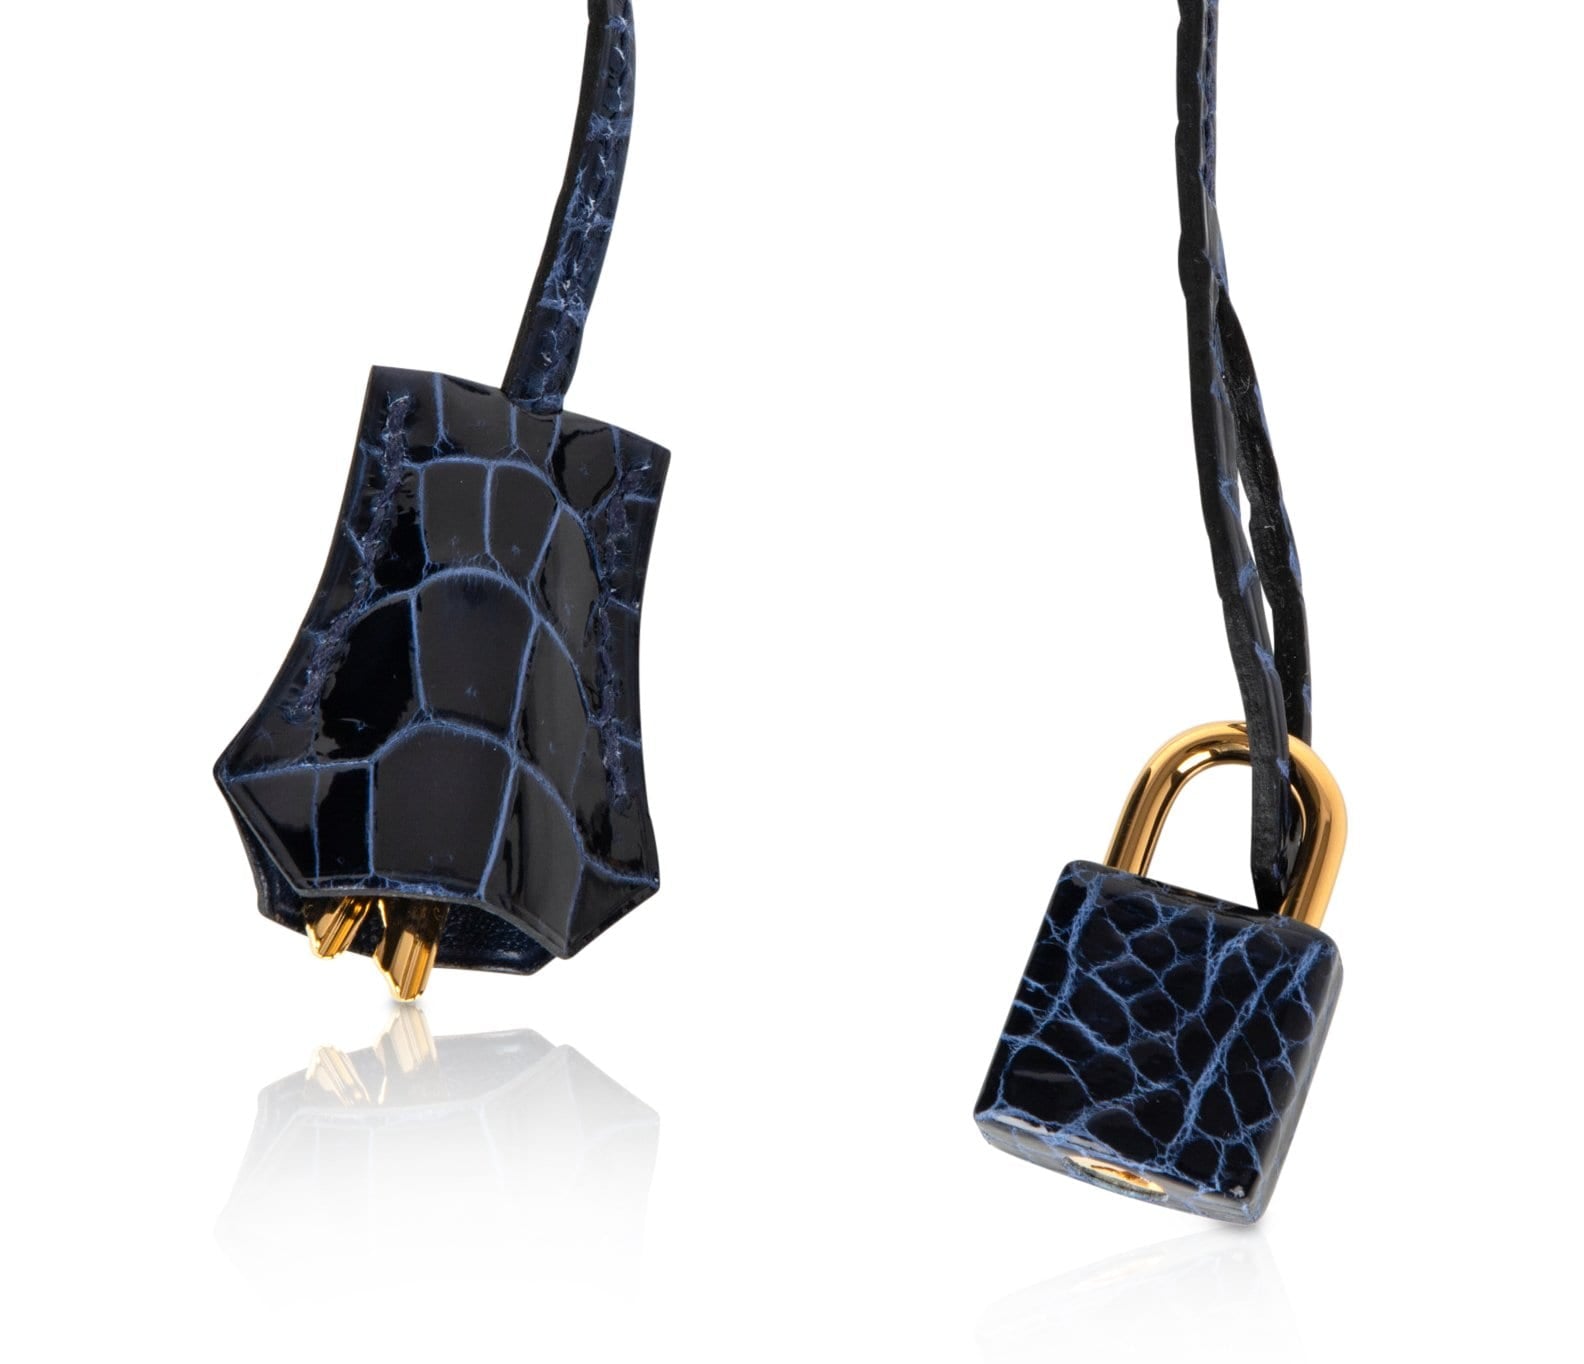 Hermès Birkin 35 Blue Abysse Shiny Porosus Crocodile Gold Hardware